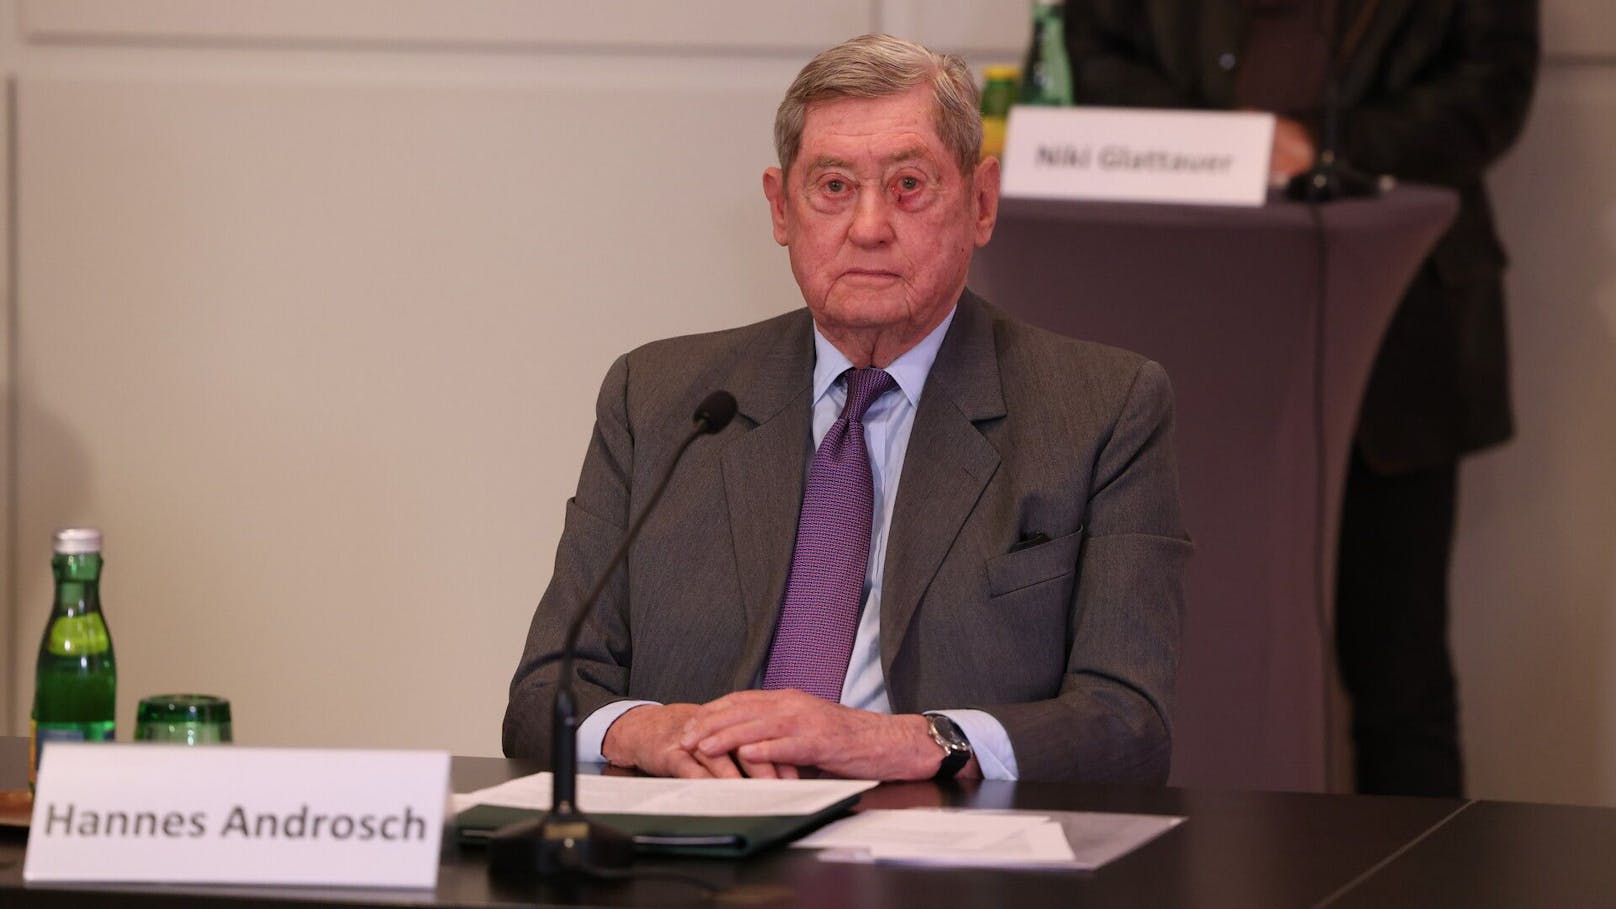 Hannes Androsch ist ehemaliger Finanzminister.